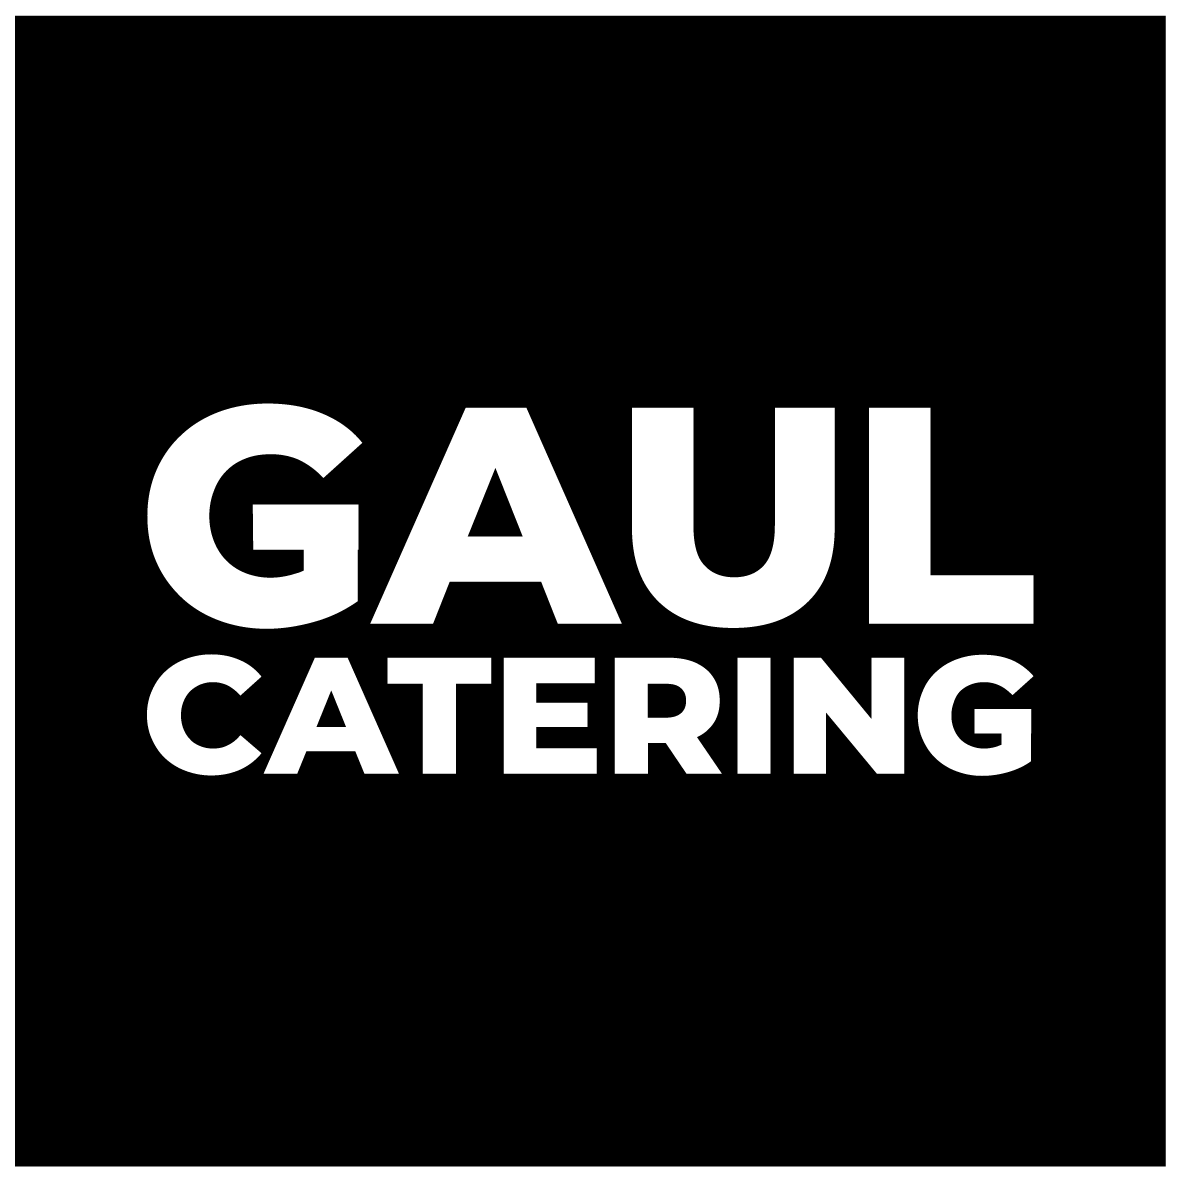 Gauls Catering GmbH & Co. KG - c/o Merck Stadion am Böllenfalltor